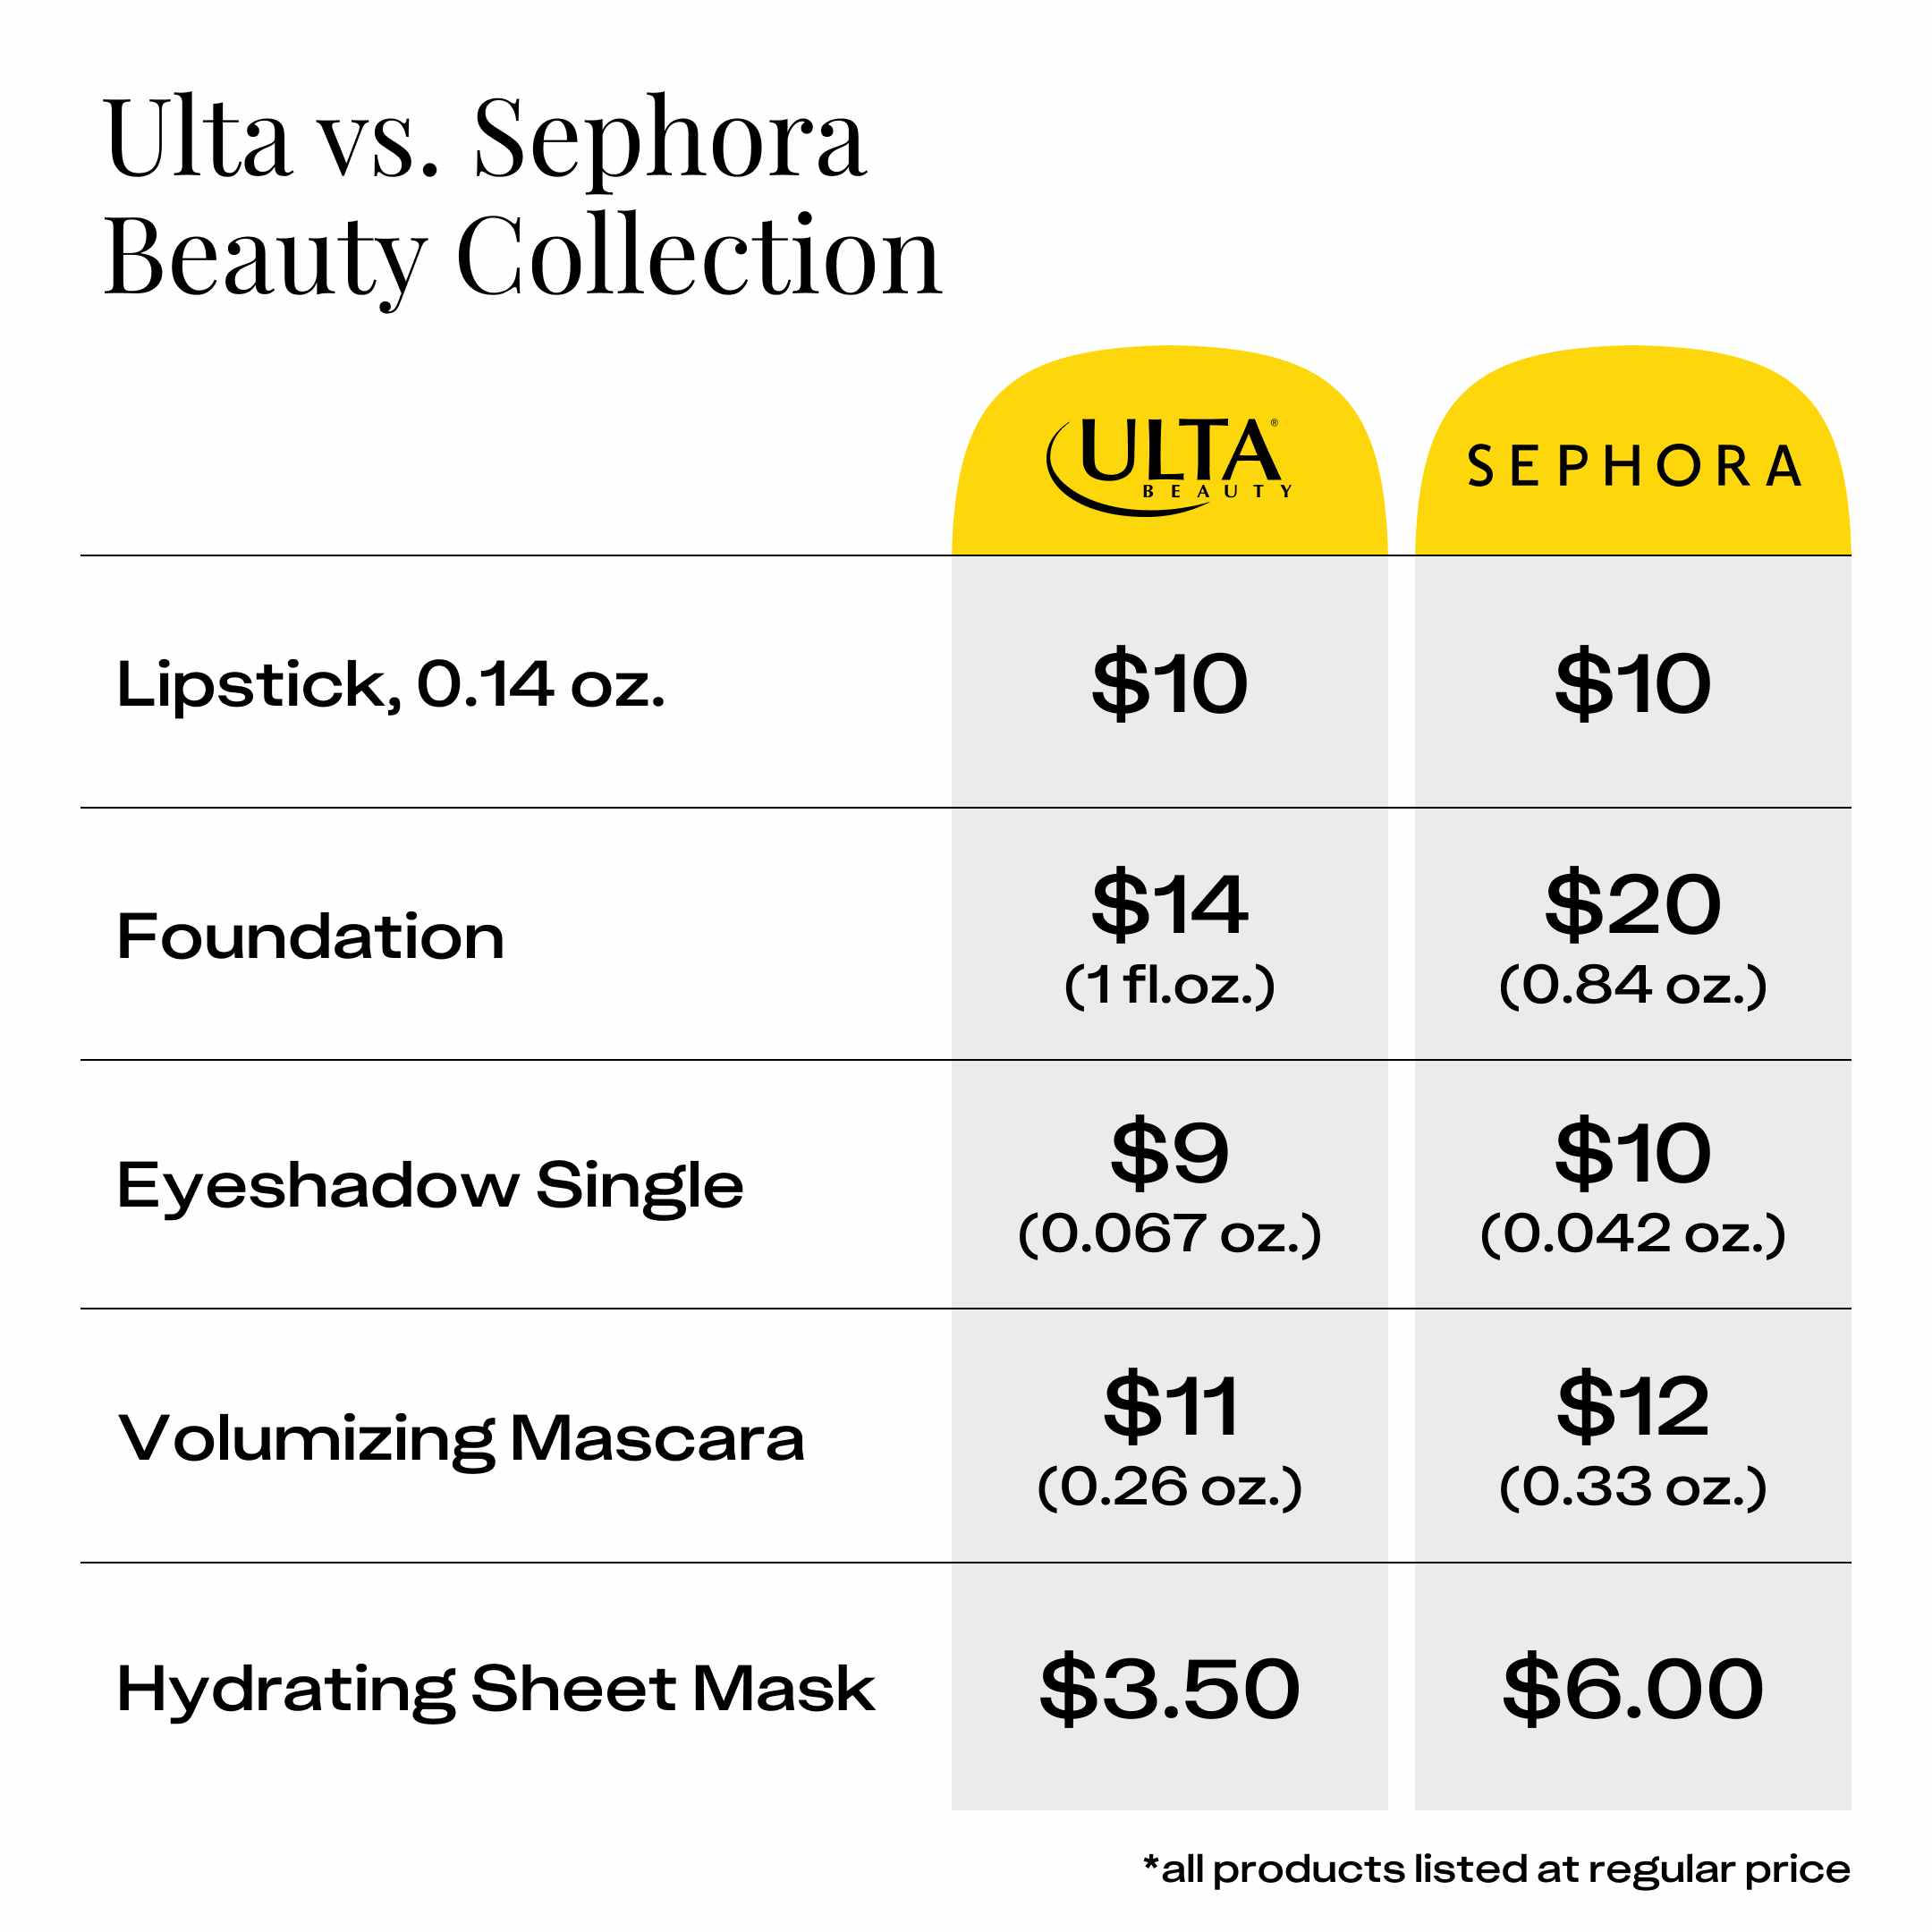 Ulta Beauty Collection vs. Sephora Beauty Collection Price Comparison